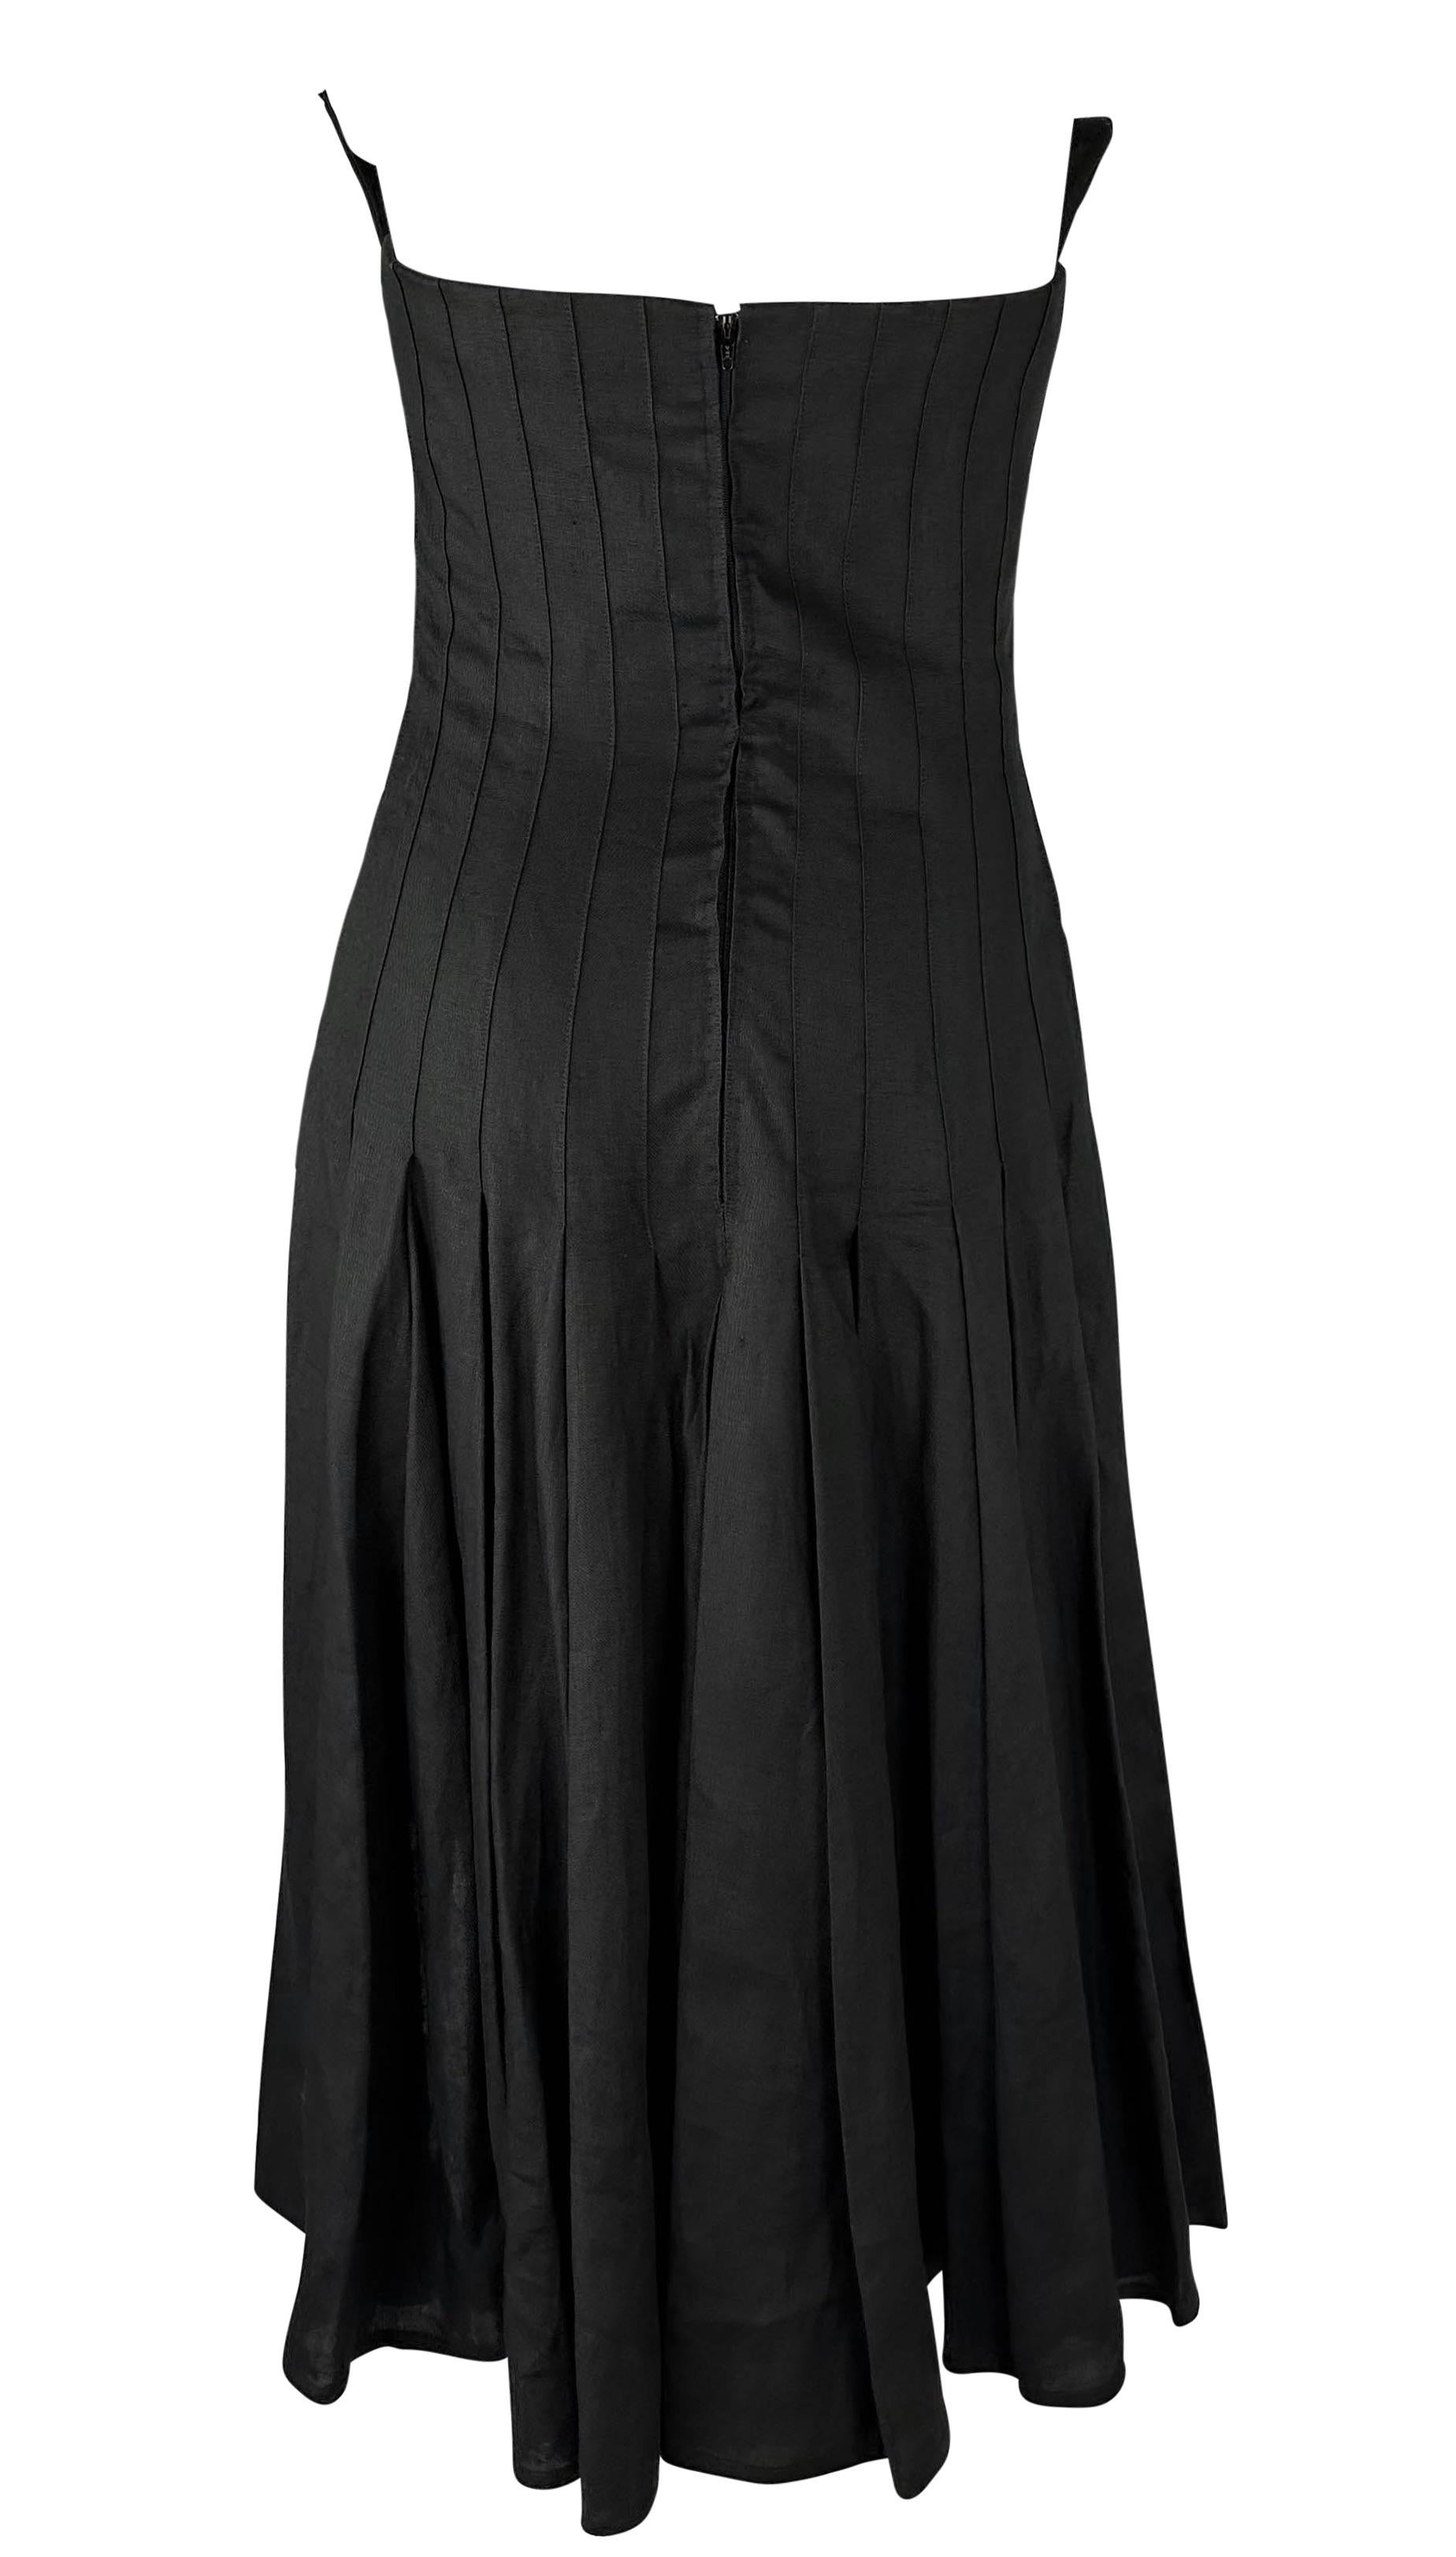 S/S 1987 Karl Lagerfeld Runway  Taillight Rhinestone Sequin Black Dress For Sale 3